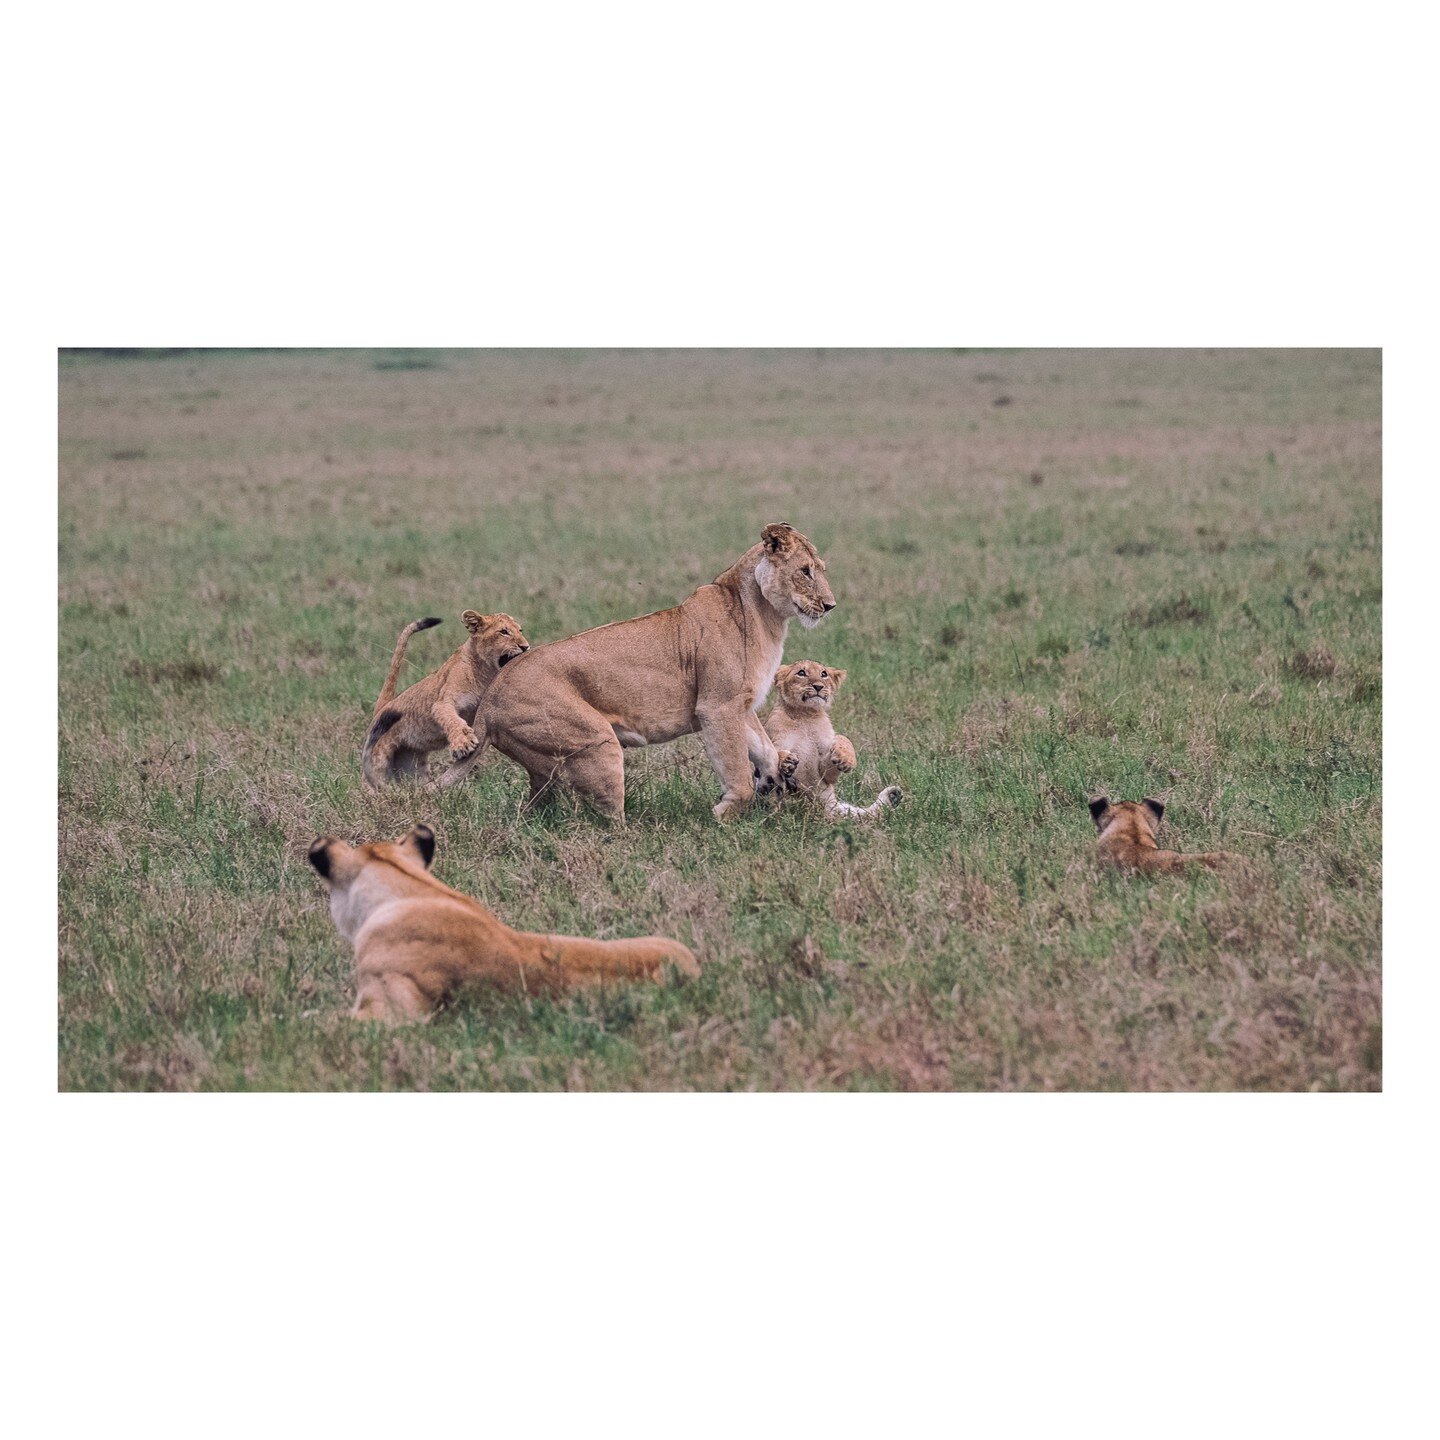 🦁 Masai Mara #lion #wildlife #lionking #lions #animals #nature #africa #king #lioness #photography #safari #wildlifephotography #animal #bigcats #cat #naturephotography #kenya #masaimara #photosafari #wildlifephotographer #wildlifeaddicts #ig_wildli